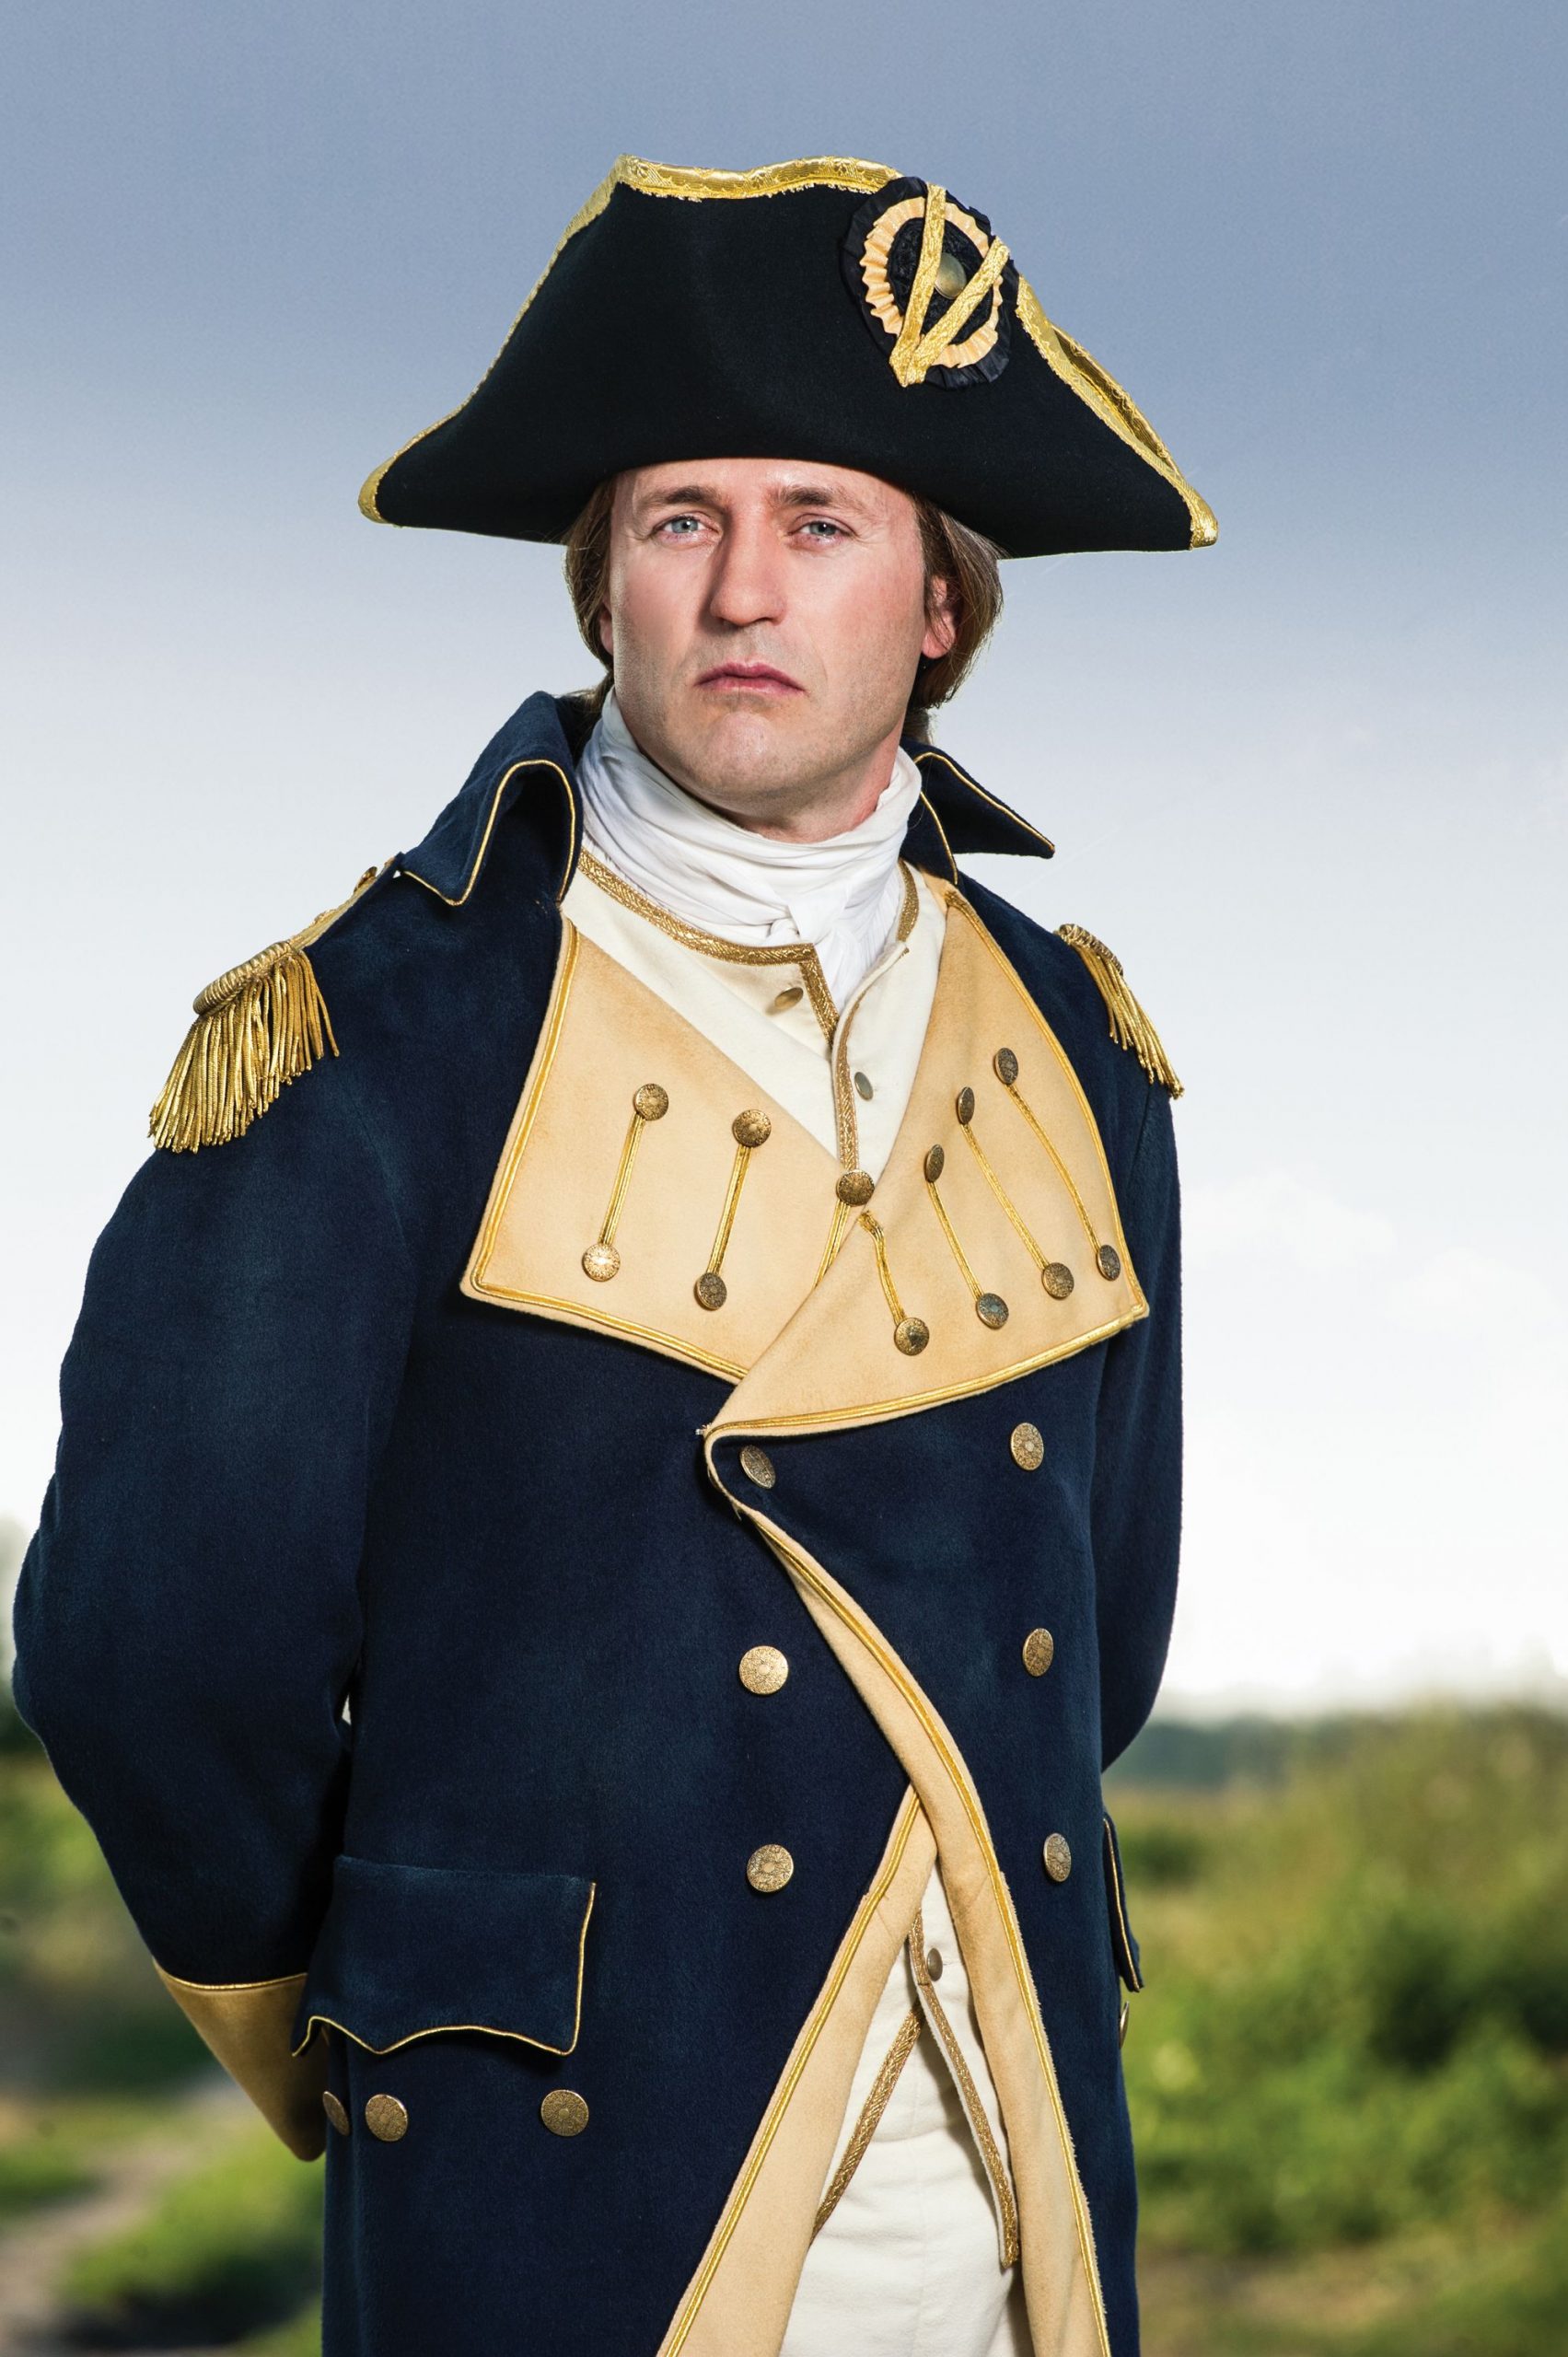 Jason O'Mara as George Washington in the 3-pret TV series Sohs of Liberty (2015)